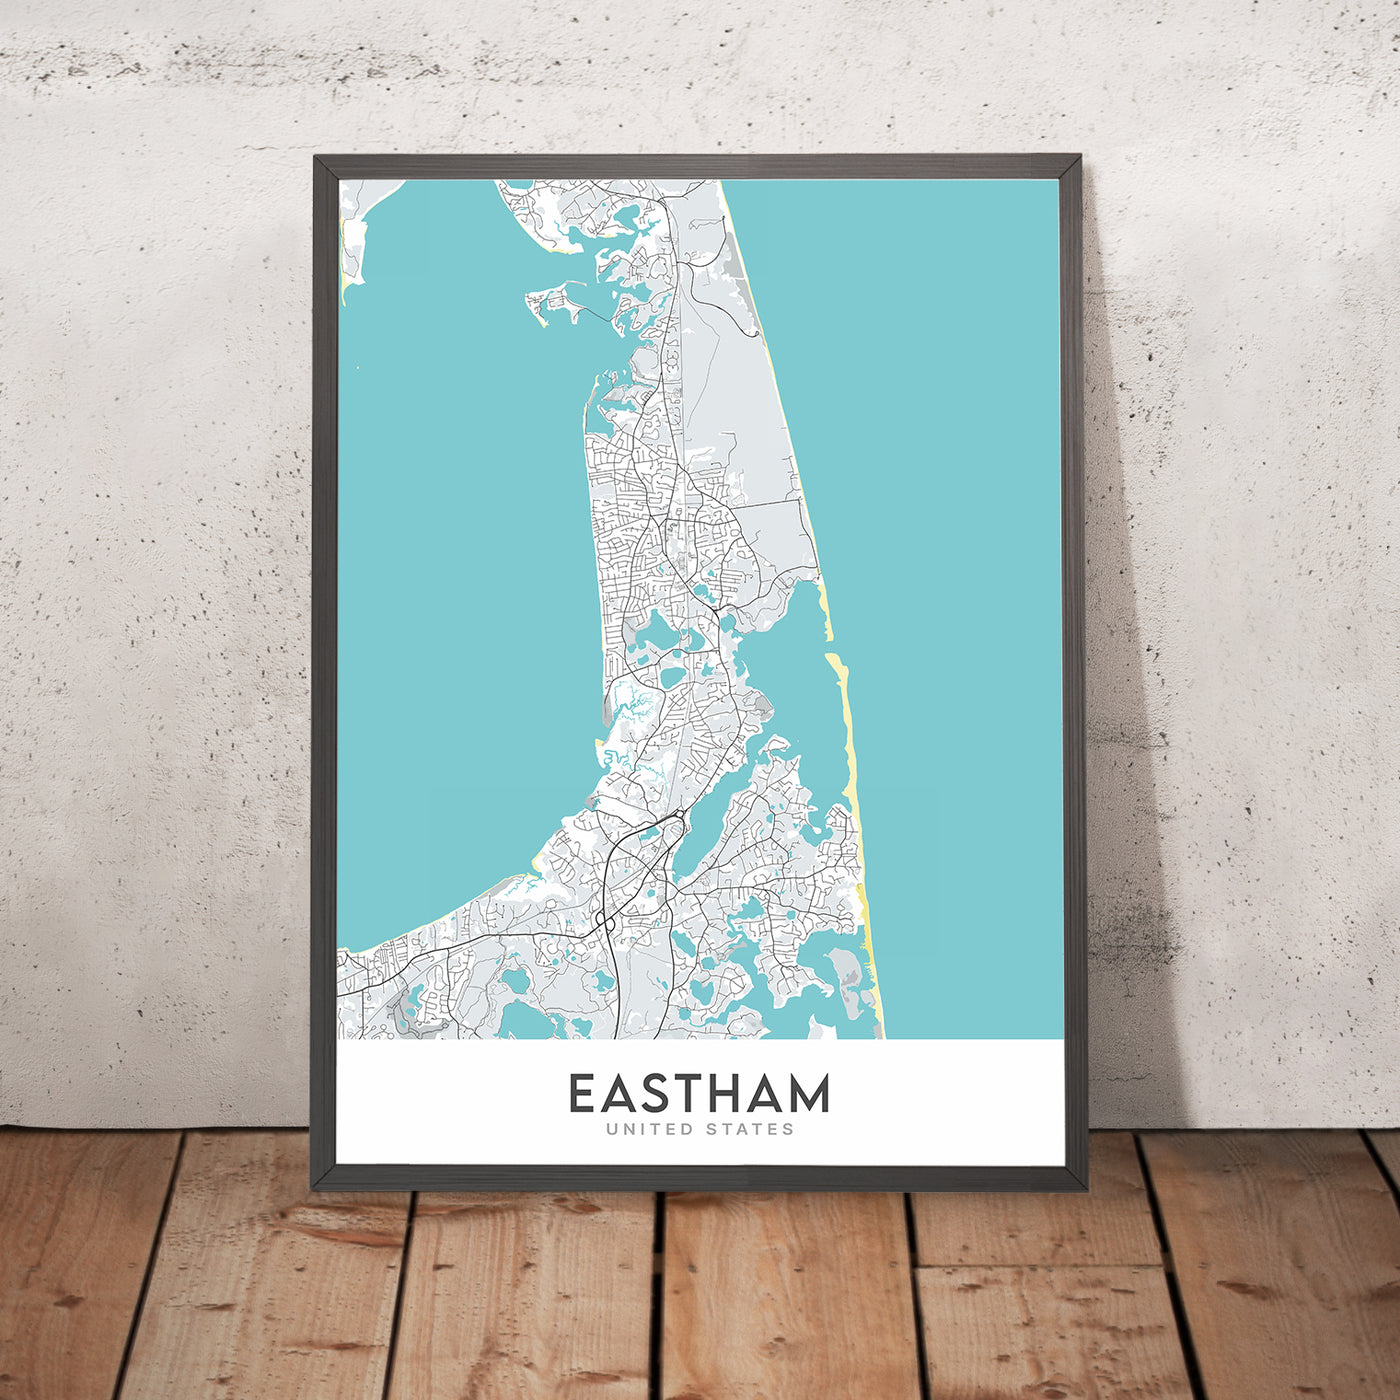 Modern City Map of Eastham, MA: Nauset Light Beach, Coast Guard Beach, First Encounter Beach, Fort Hill, Rock Harbor